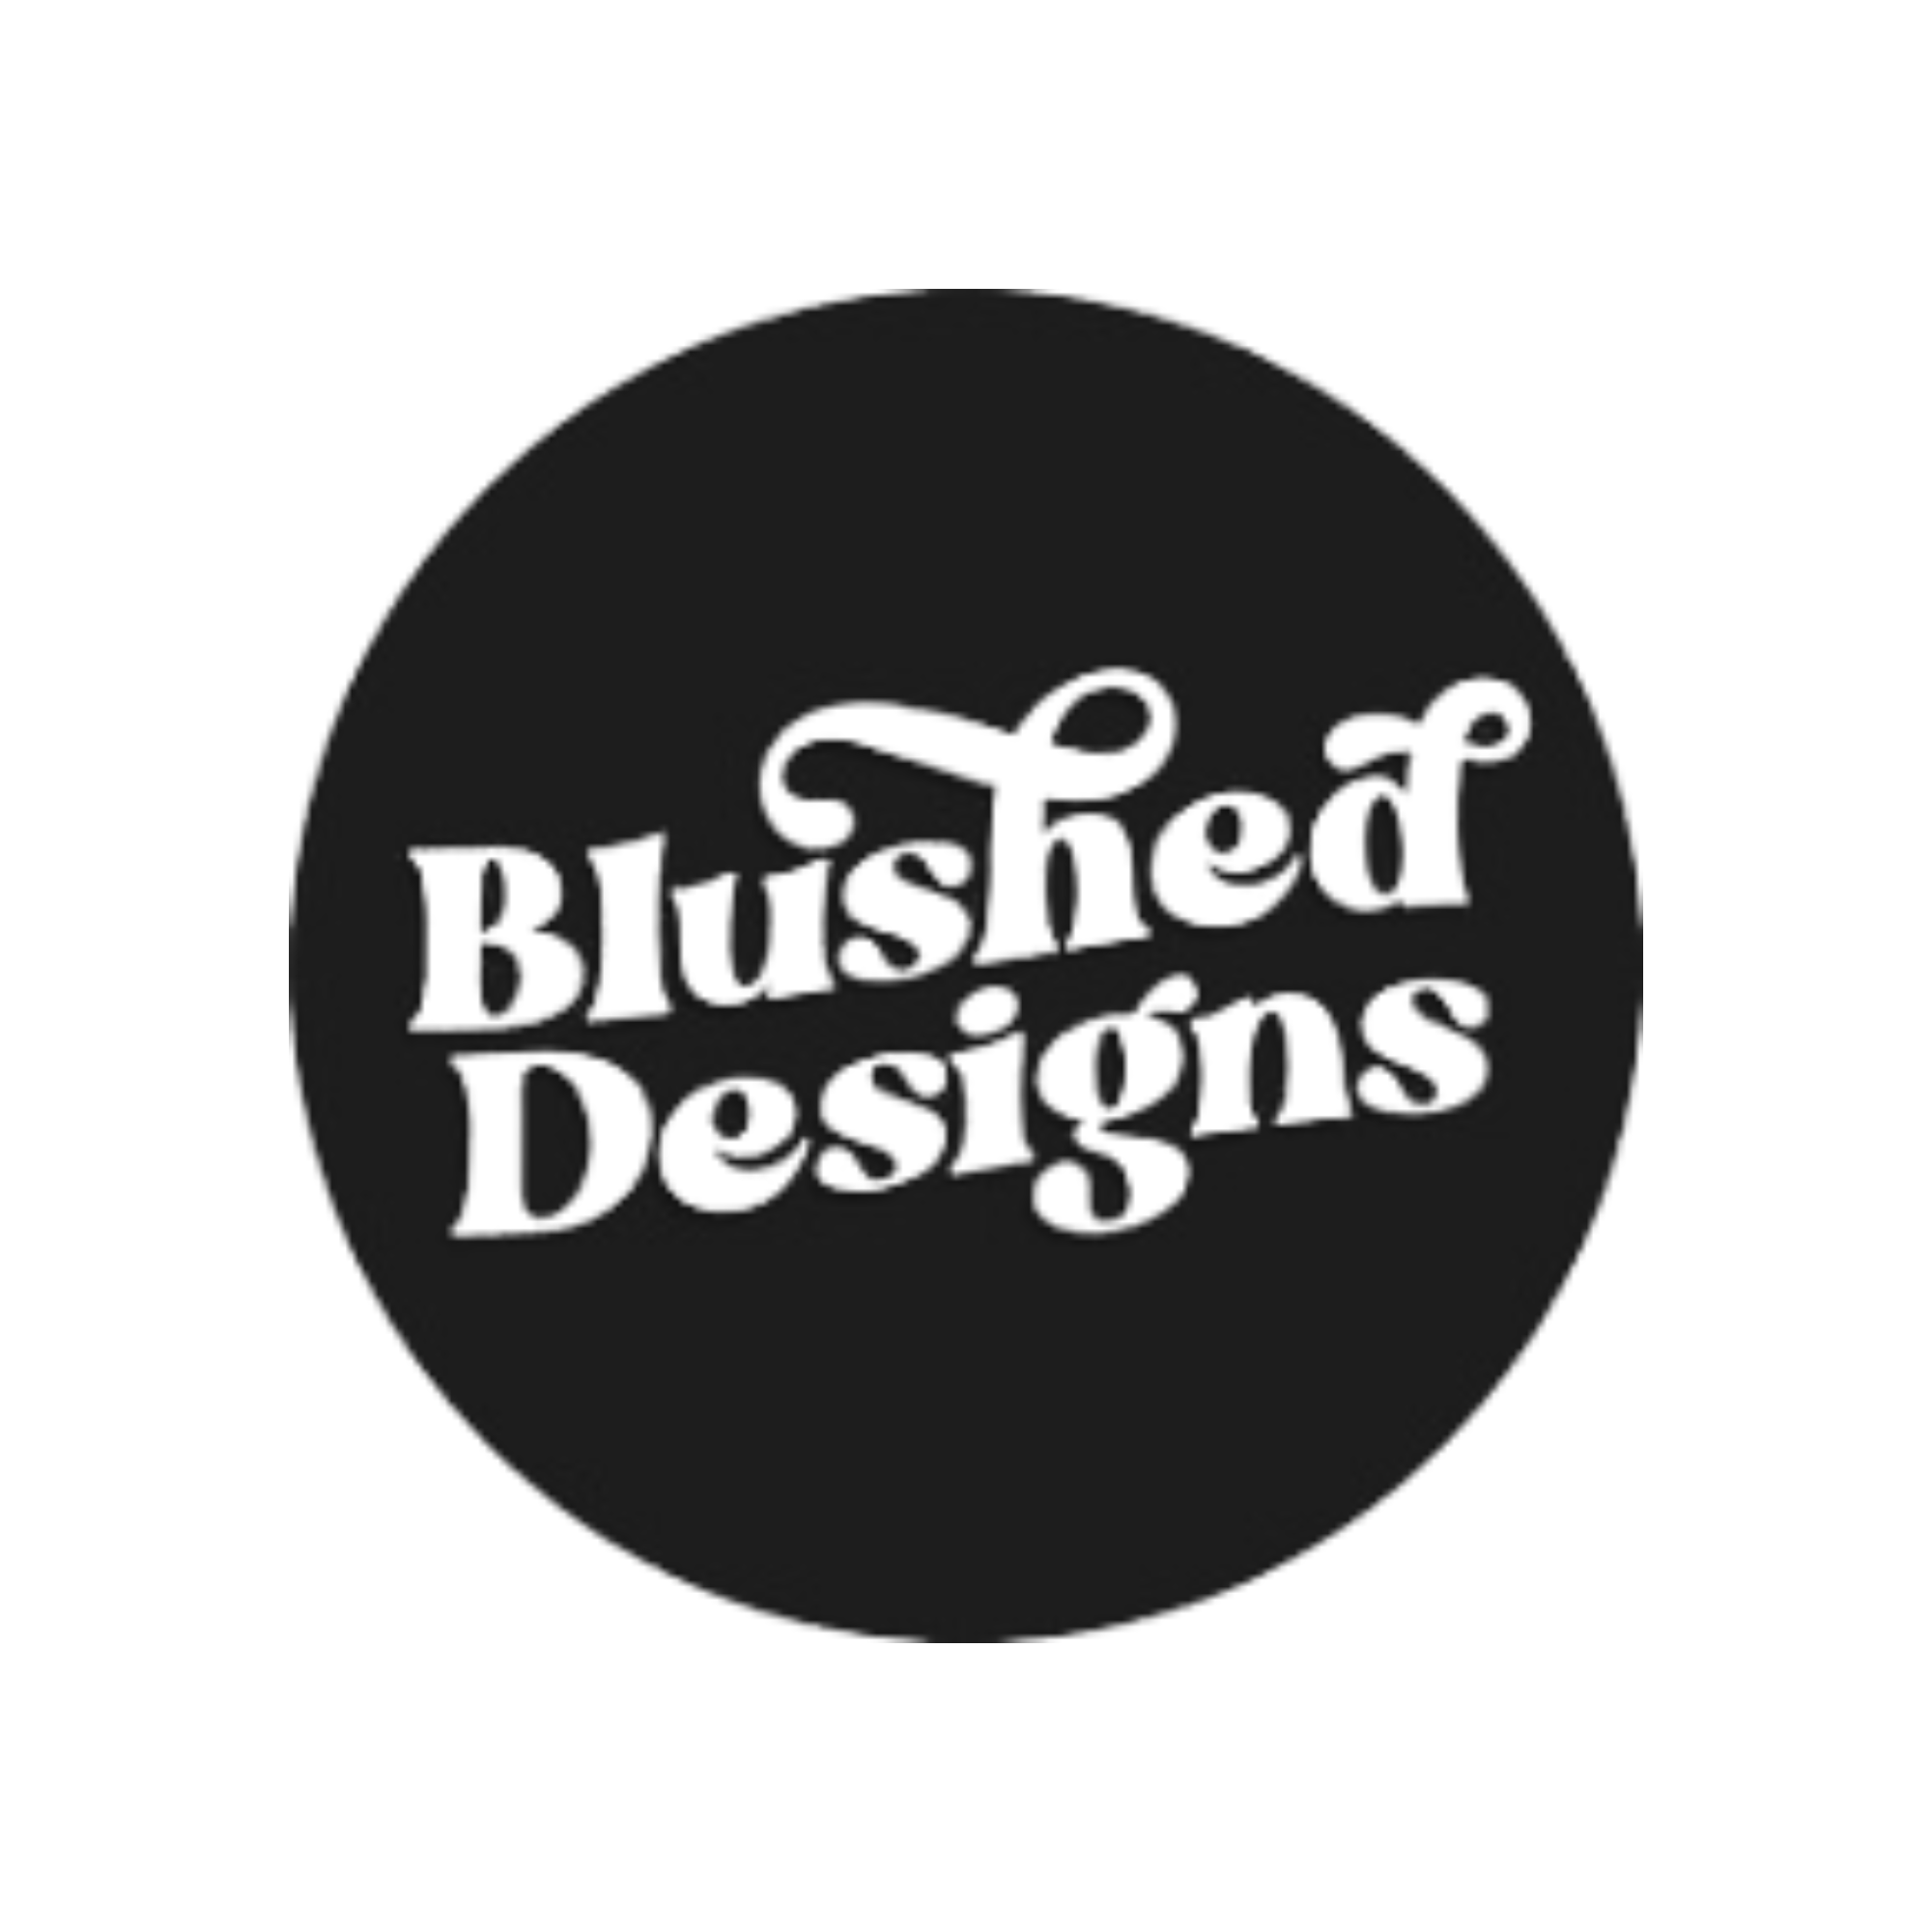 Blushed Designs Co.